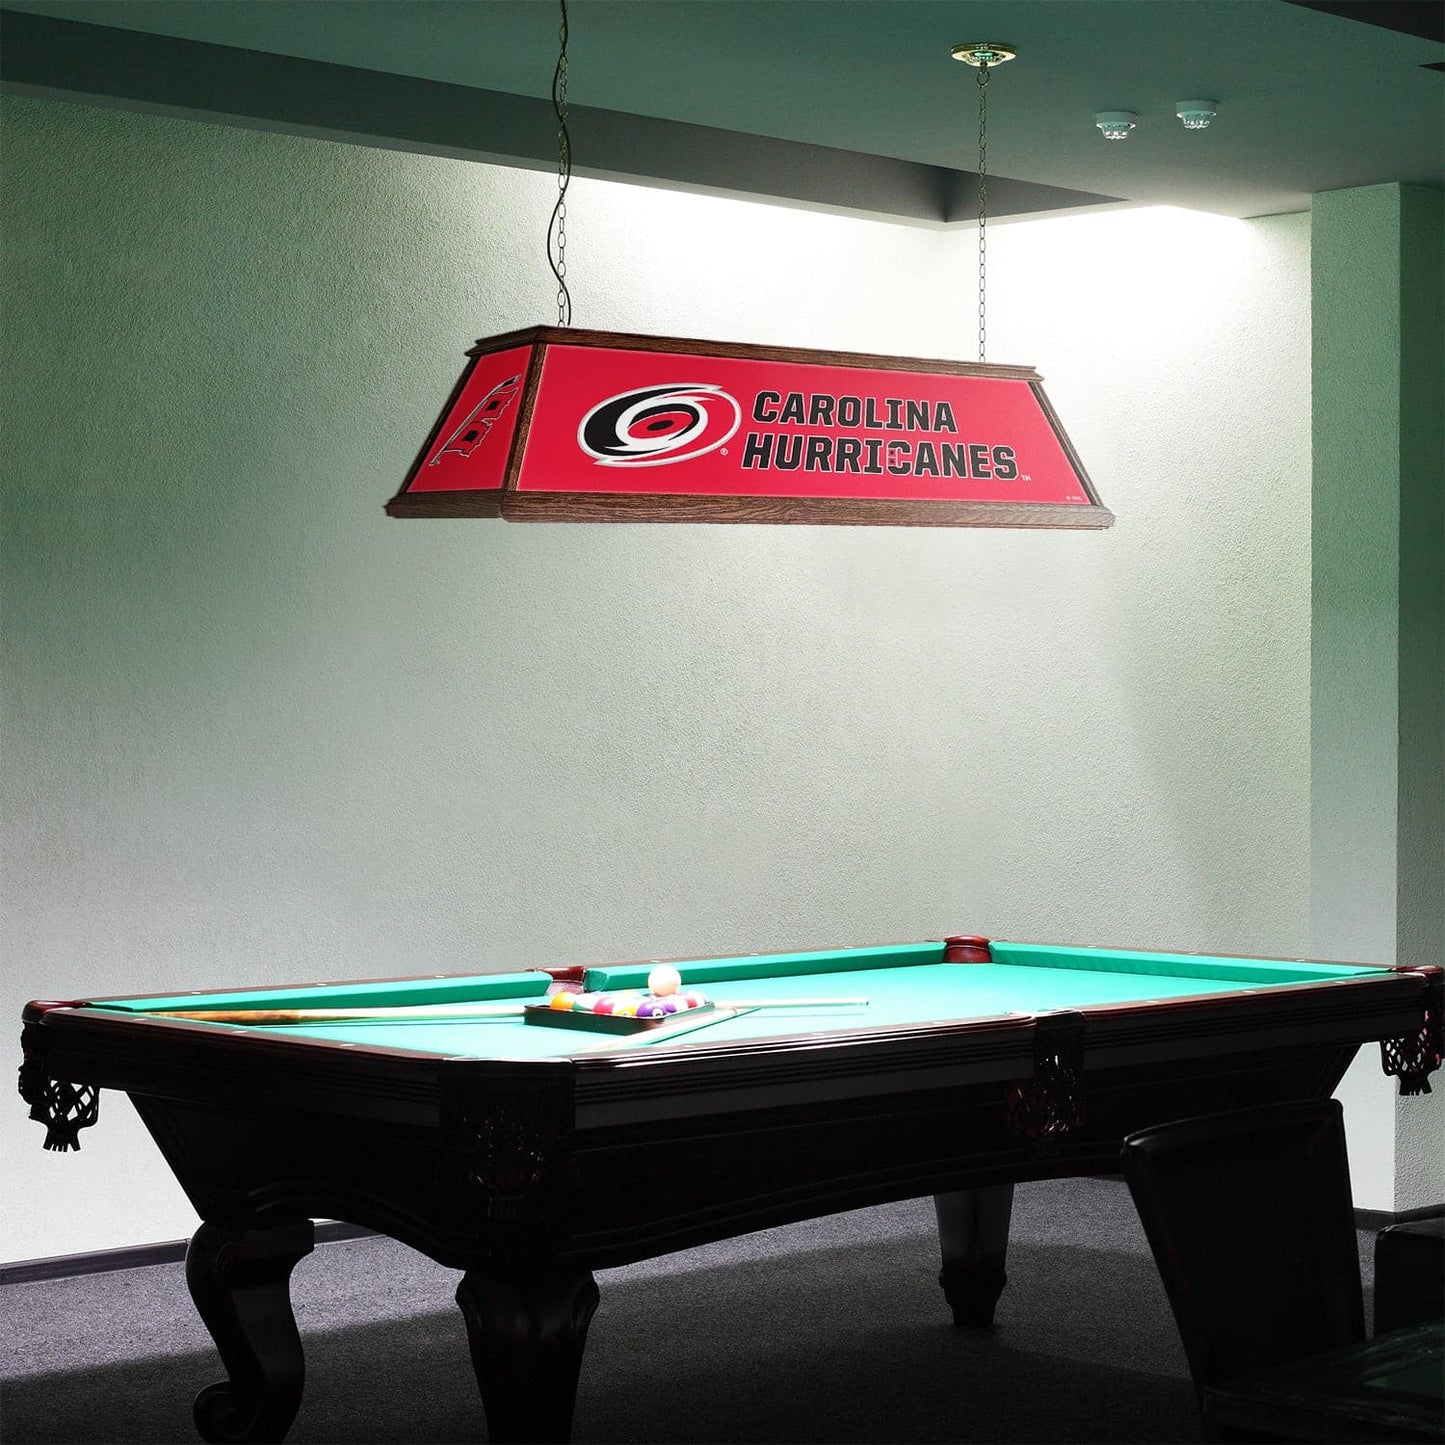 Carolina Hurricanes: Premium Wood Pool Table Light - The Fan-Brand